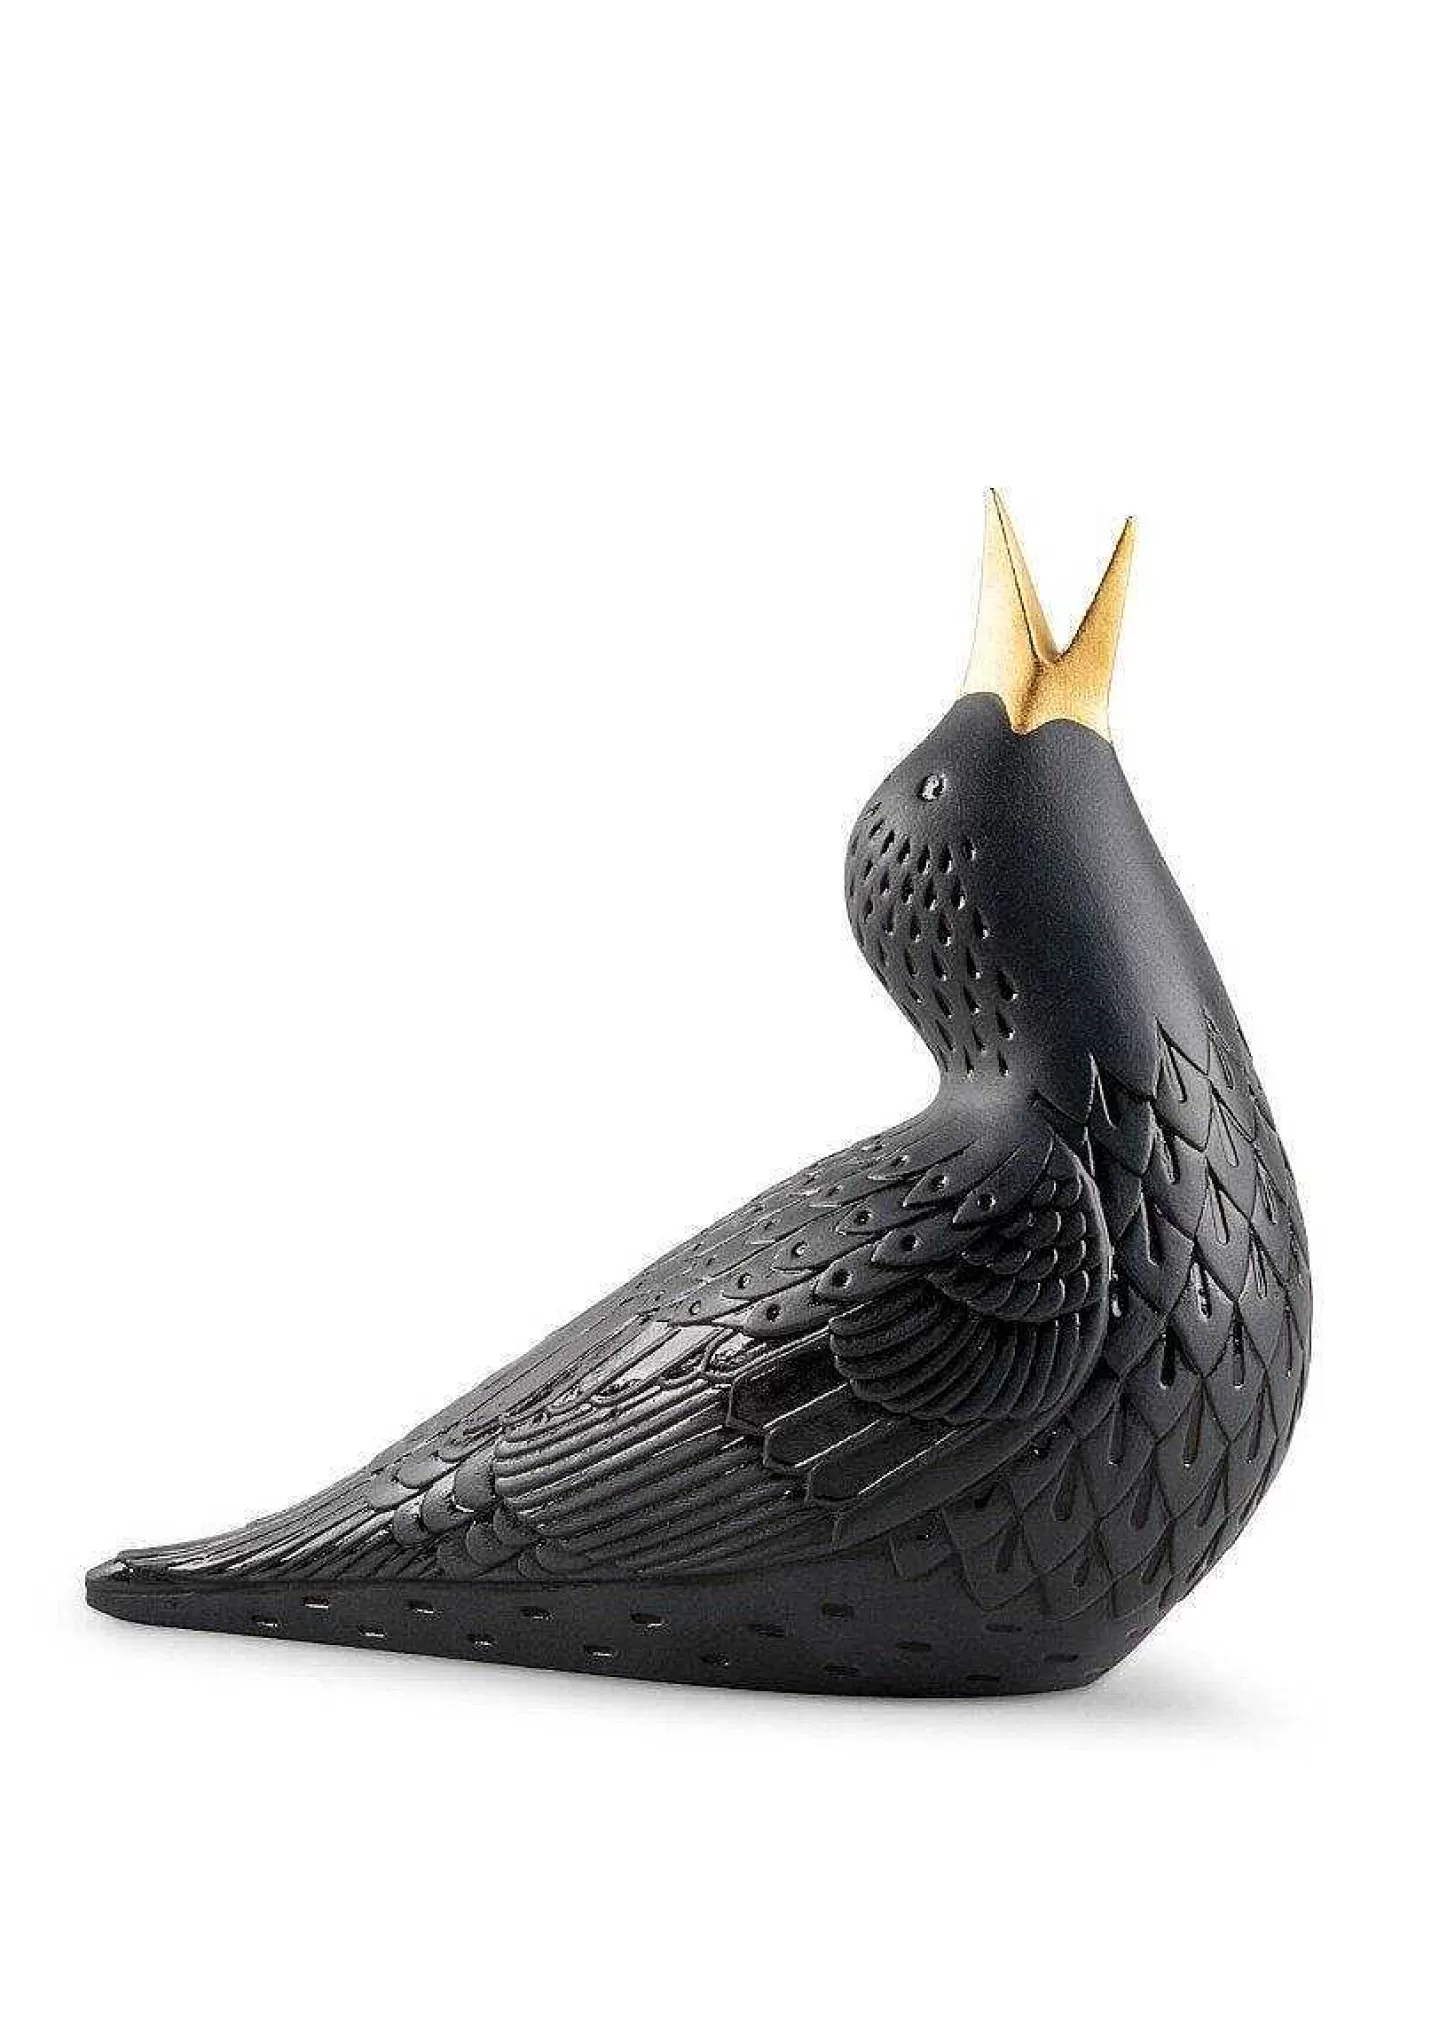 Lladró Starling I Figurine. Black^ Design